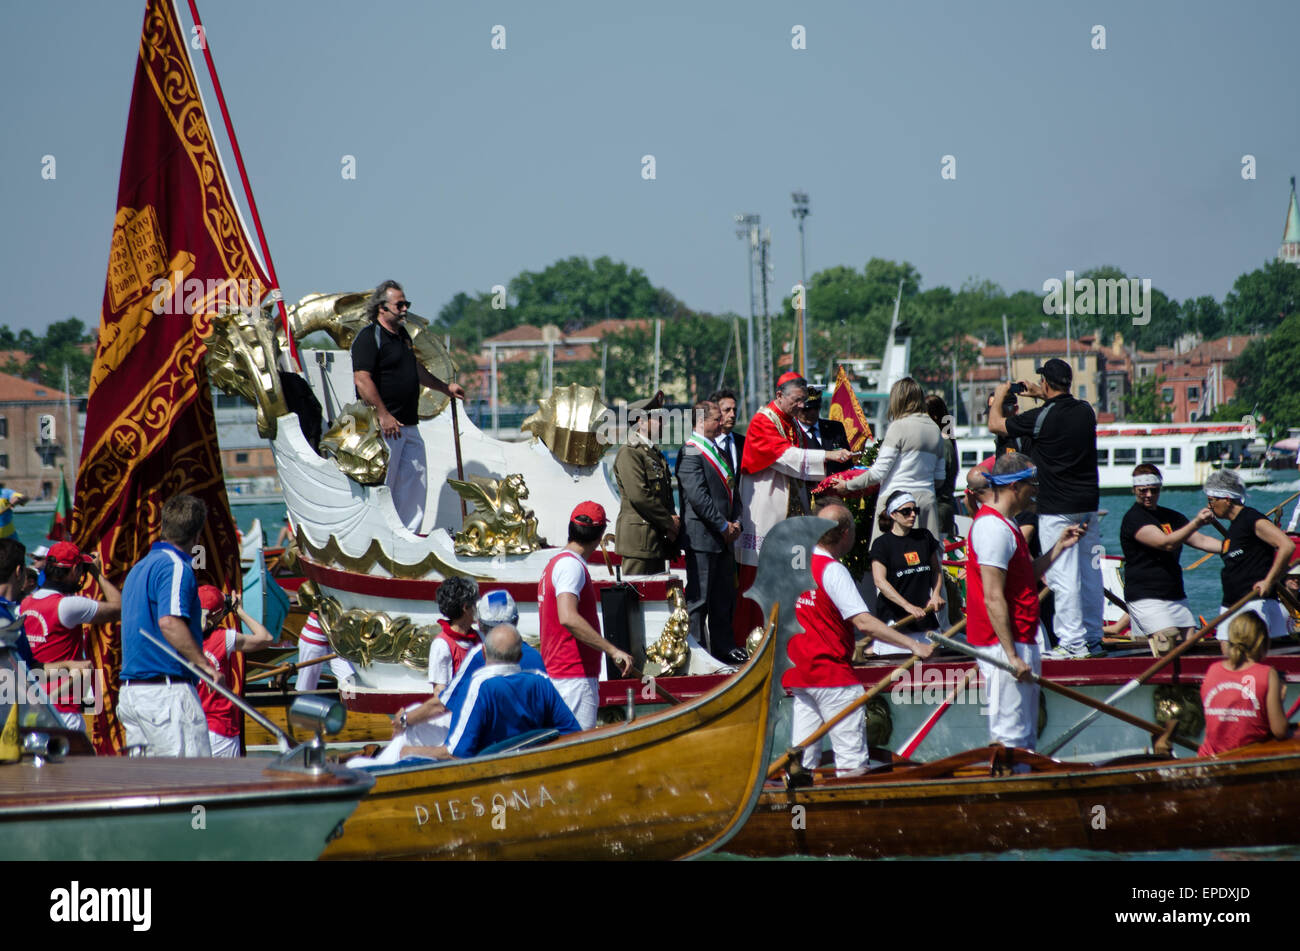 Venedig, Italien - 17. Mai 2015: Die Festa della Sensa Zeremonie für Christi Himmelfahrt, Lido, Venedig.  Ehe mit dem Meer. Stockfoto